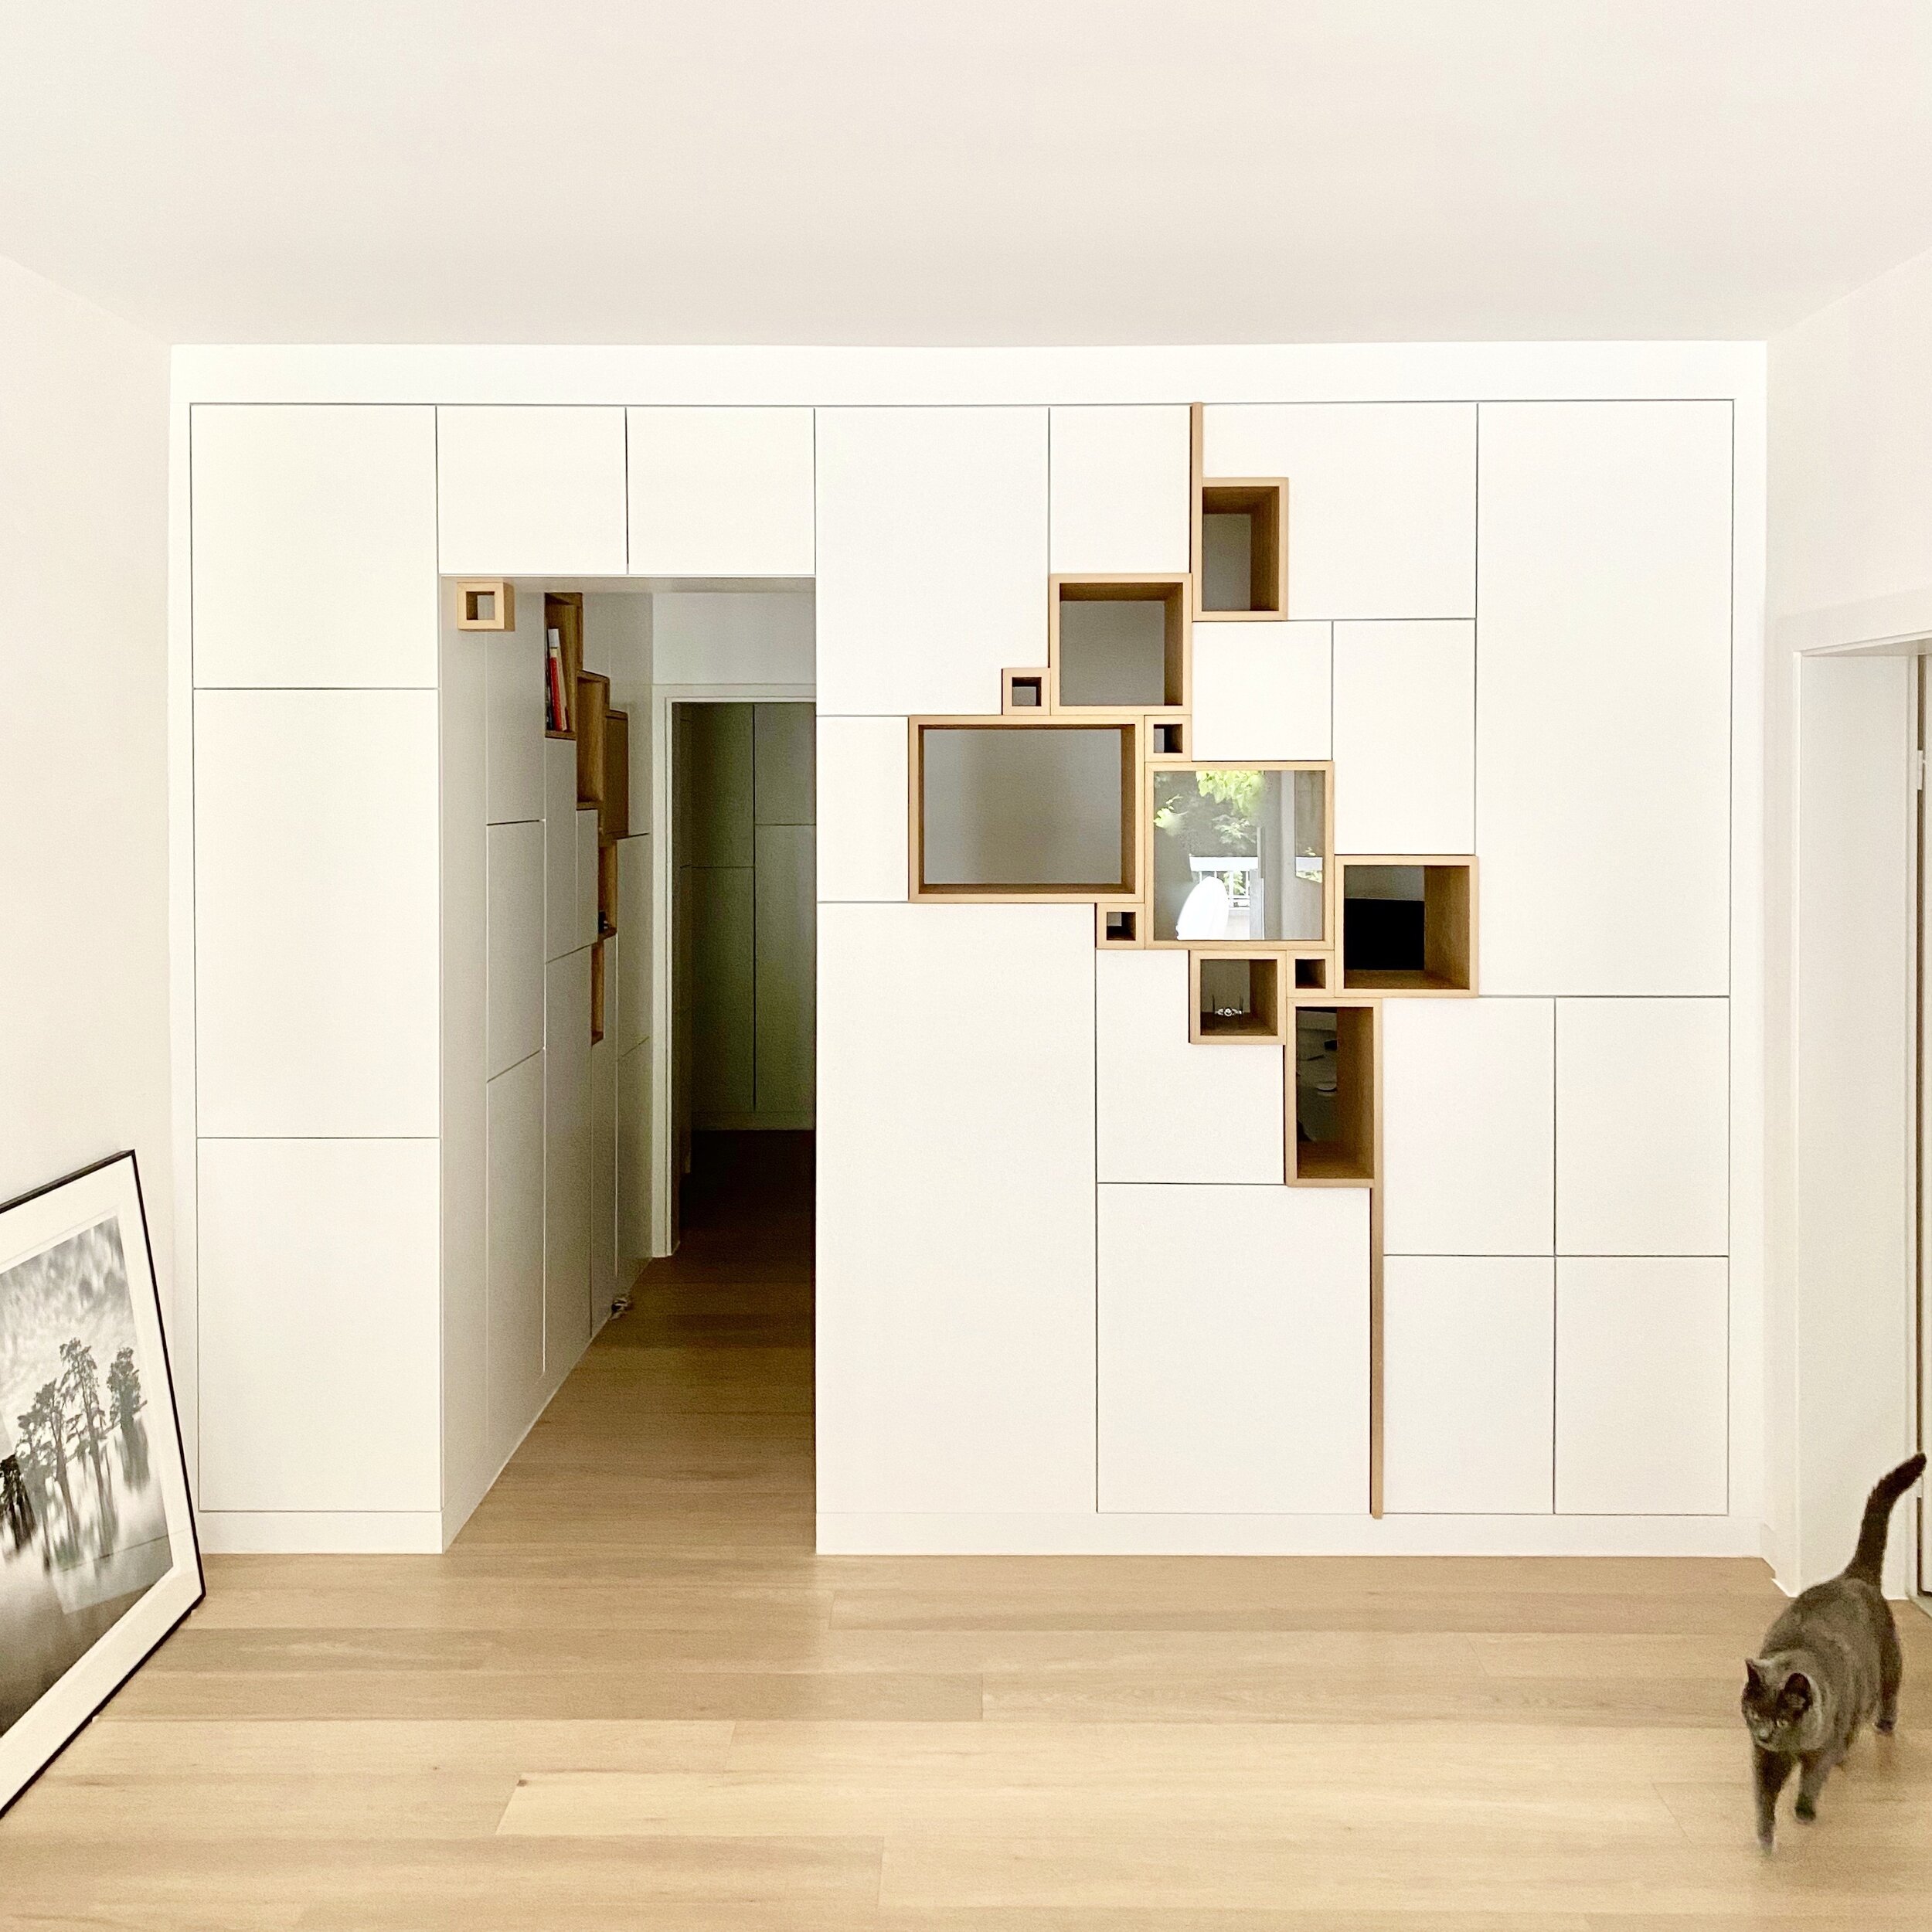 Luxemburg divider wall cabinet design by Filip Janssens 2019.jpeg